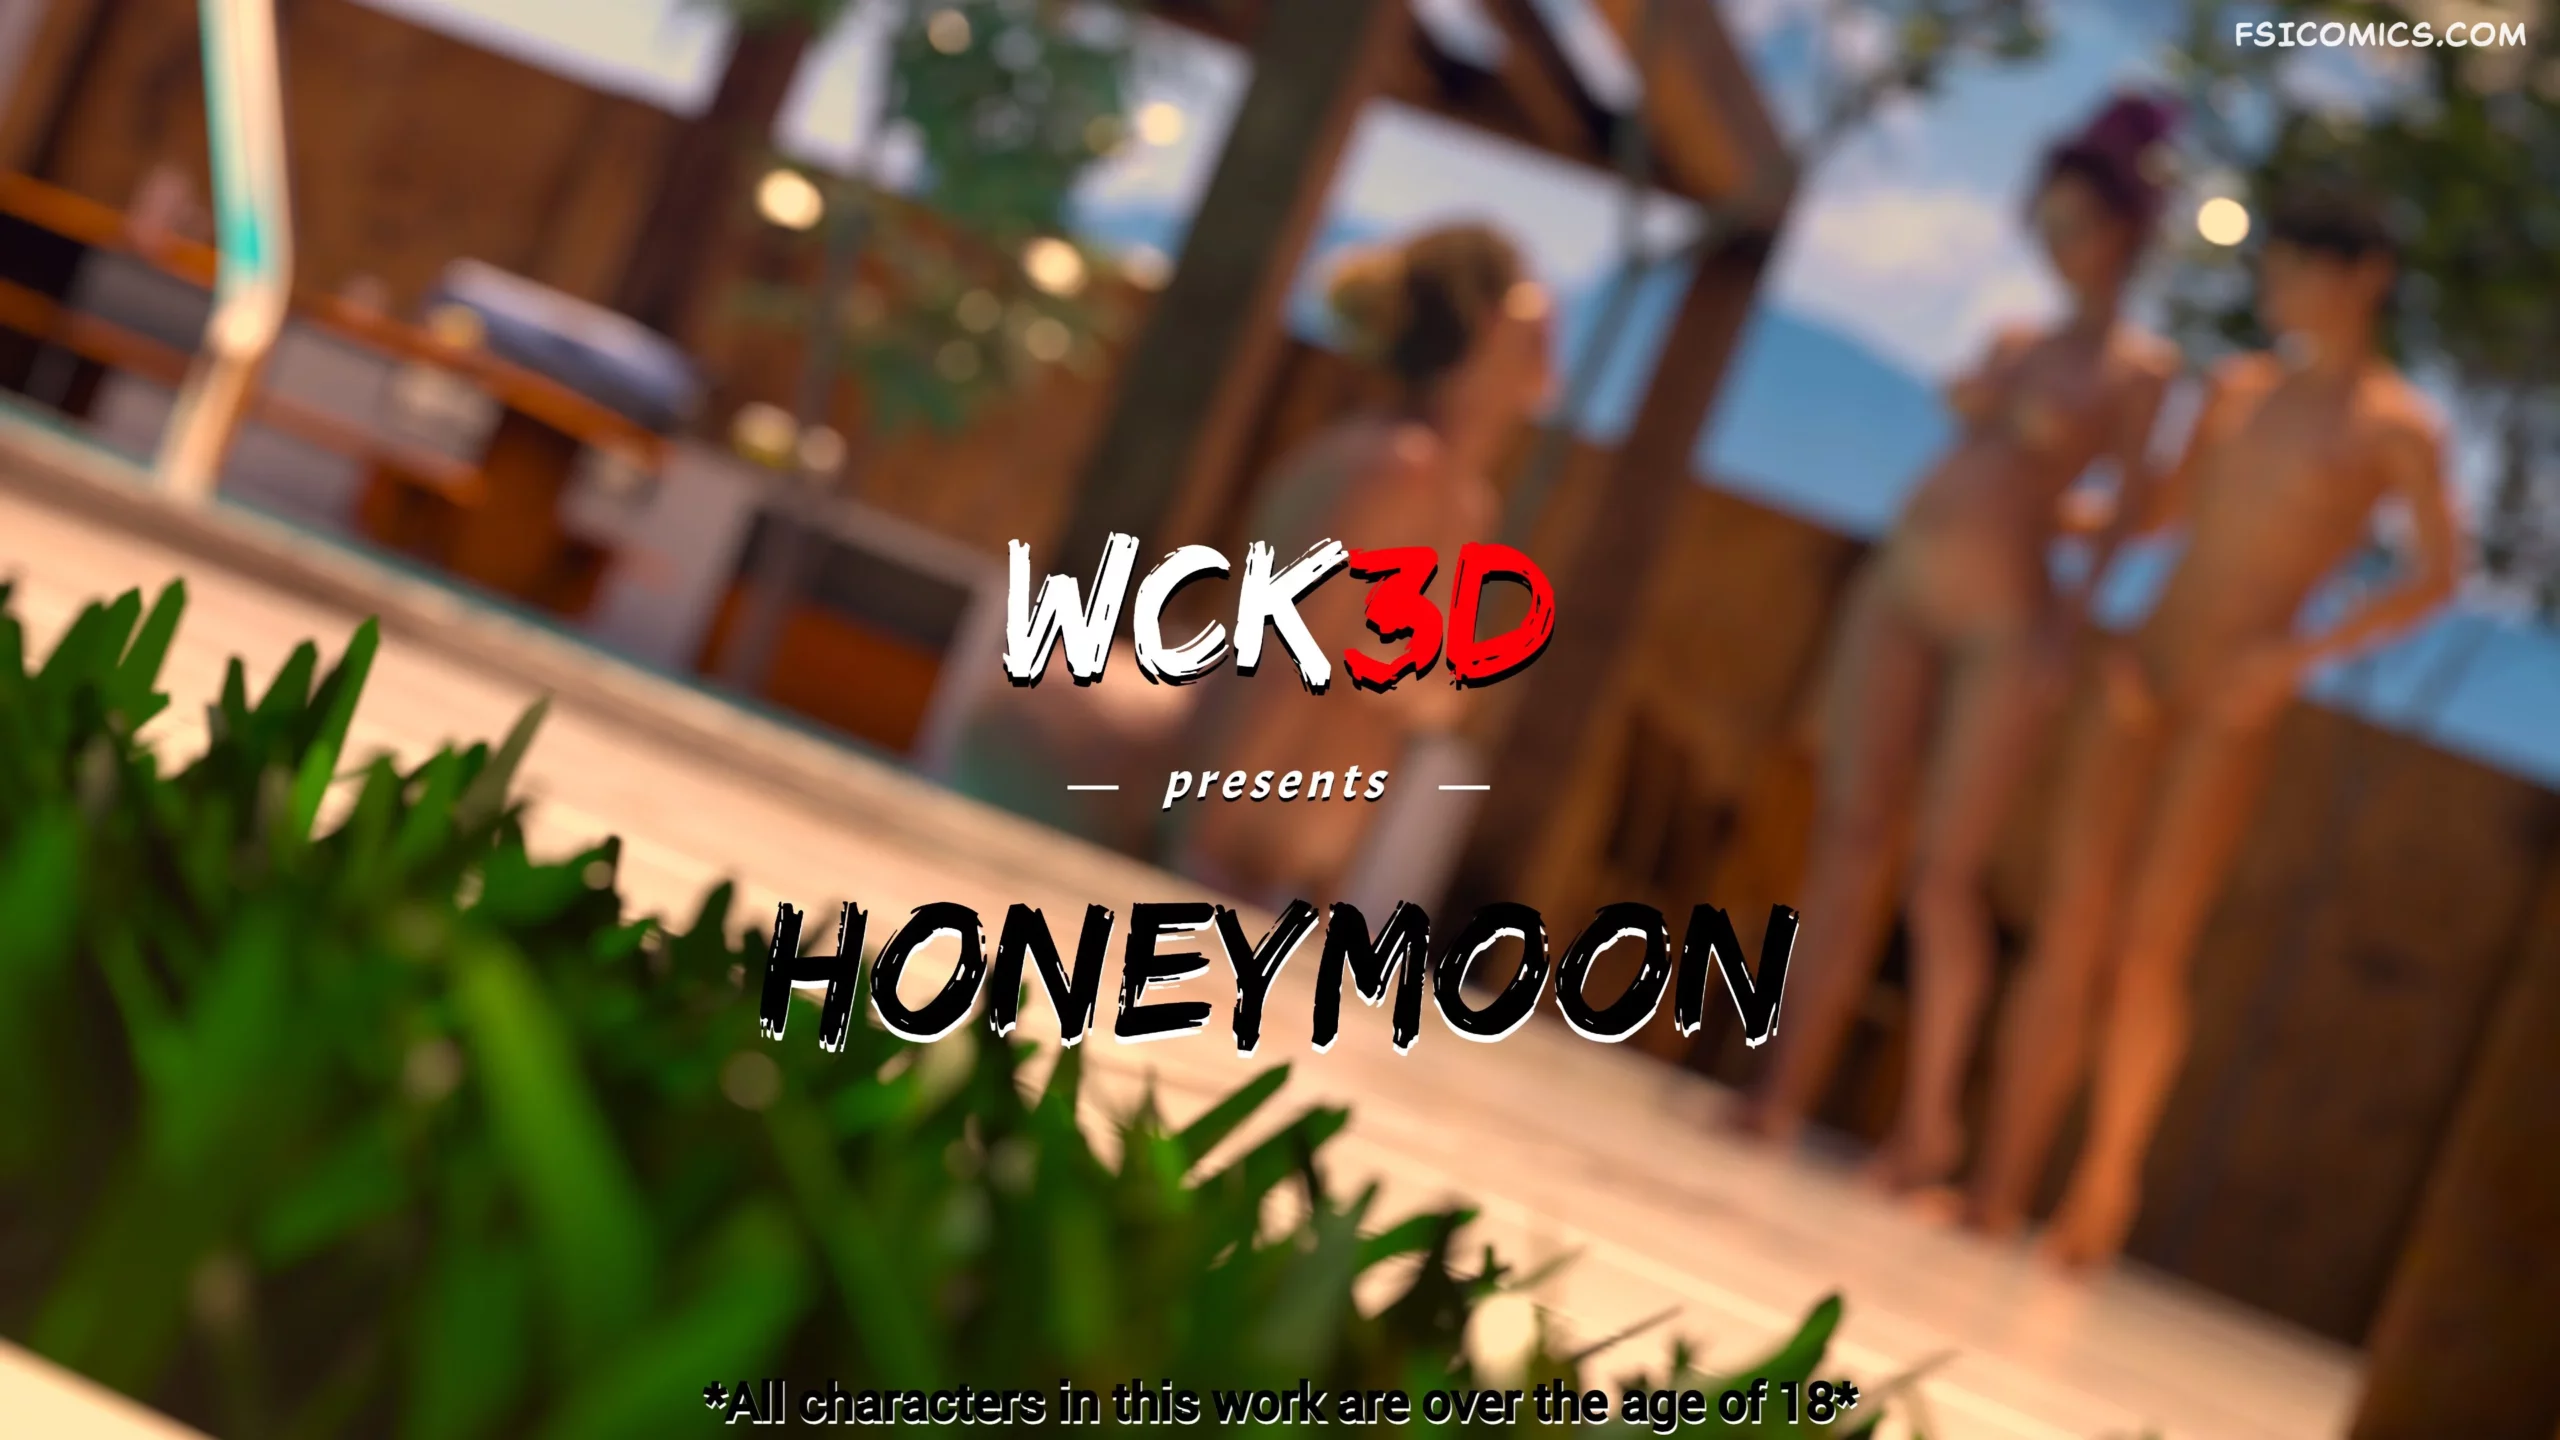 Between Us - Honeymoon - WCK3D - 319 - FSIComics